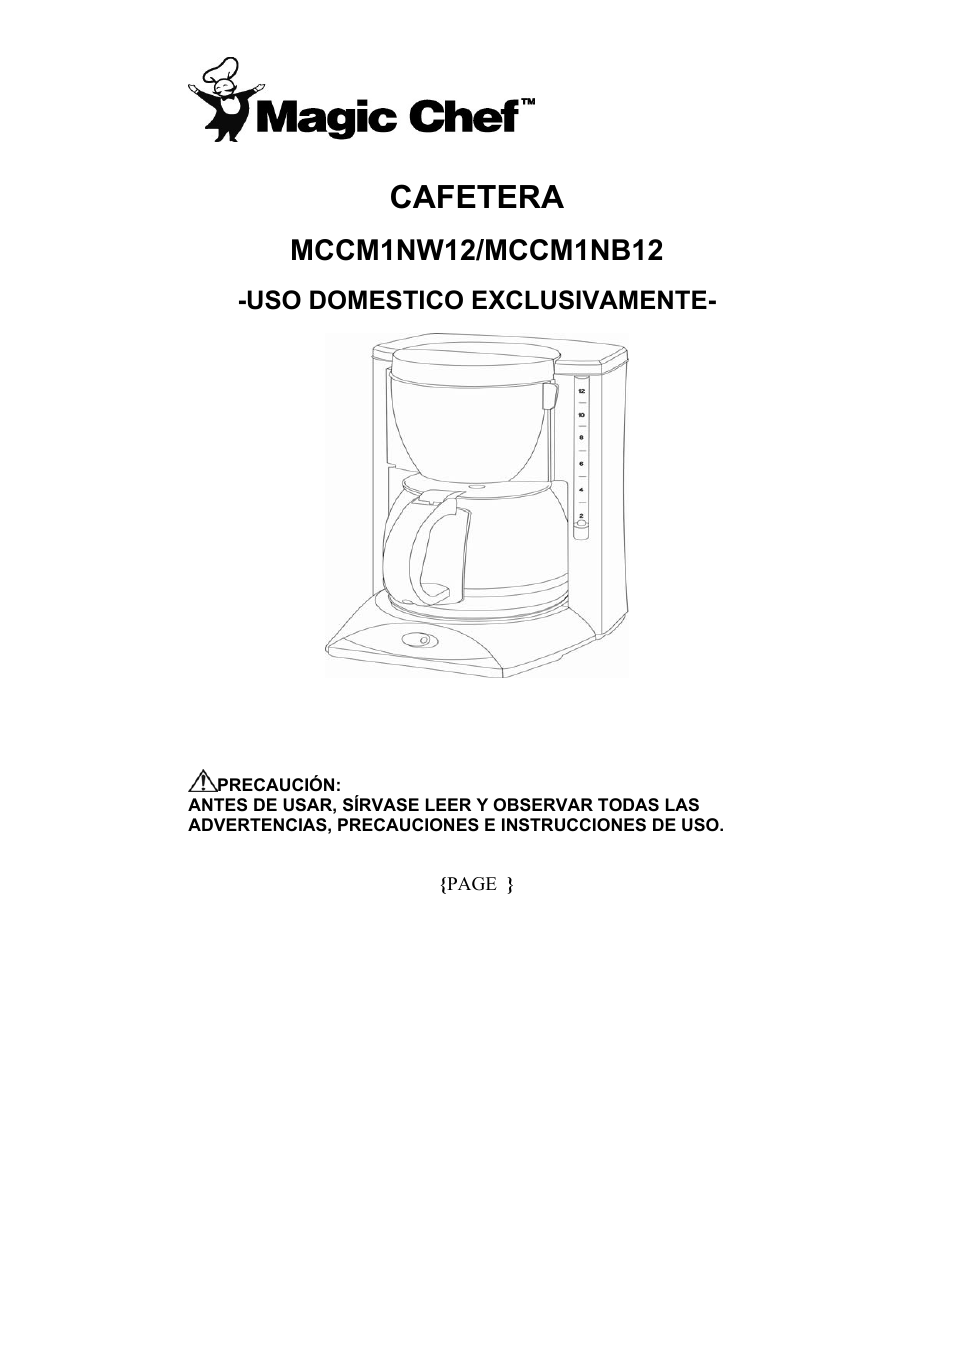 Cafetera, Mccm1nw12/mccm1nb12, Uso domestico exclusivamente | Maytag MCCM1NW12 User Manual | Page 11 / 20